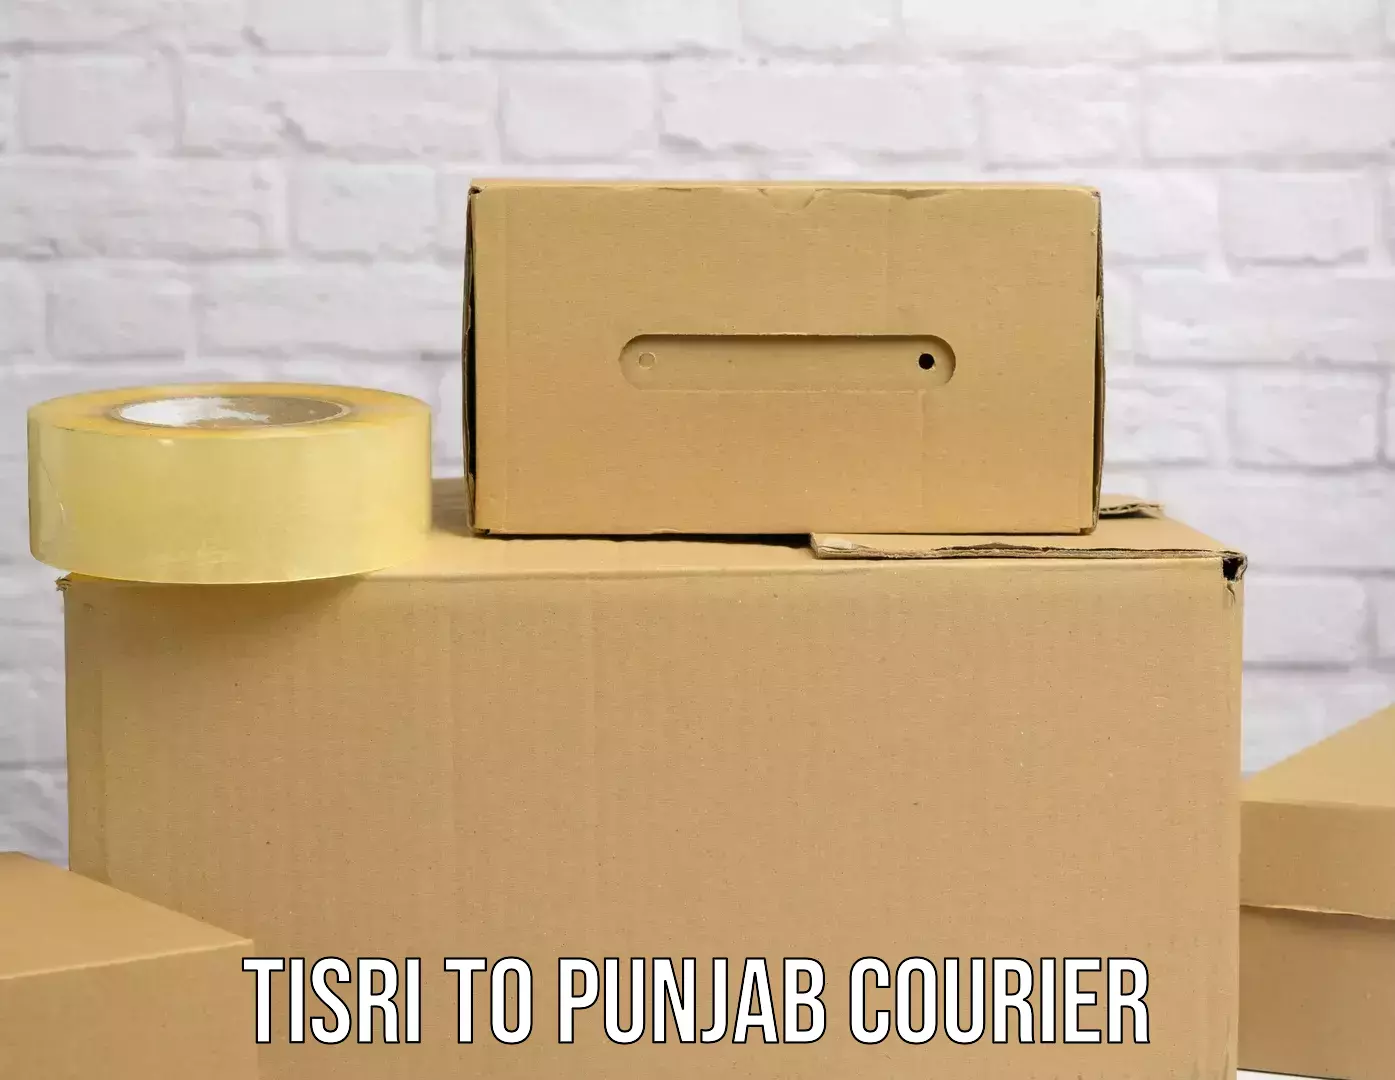 Digital courier platforms Tisri to Raikot